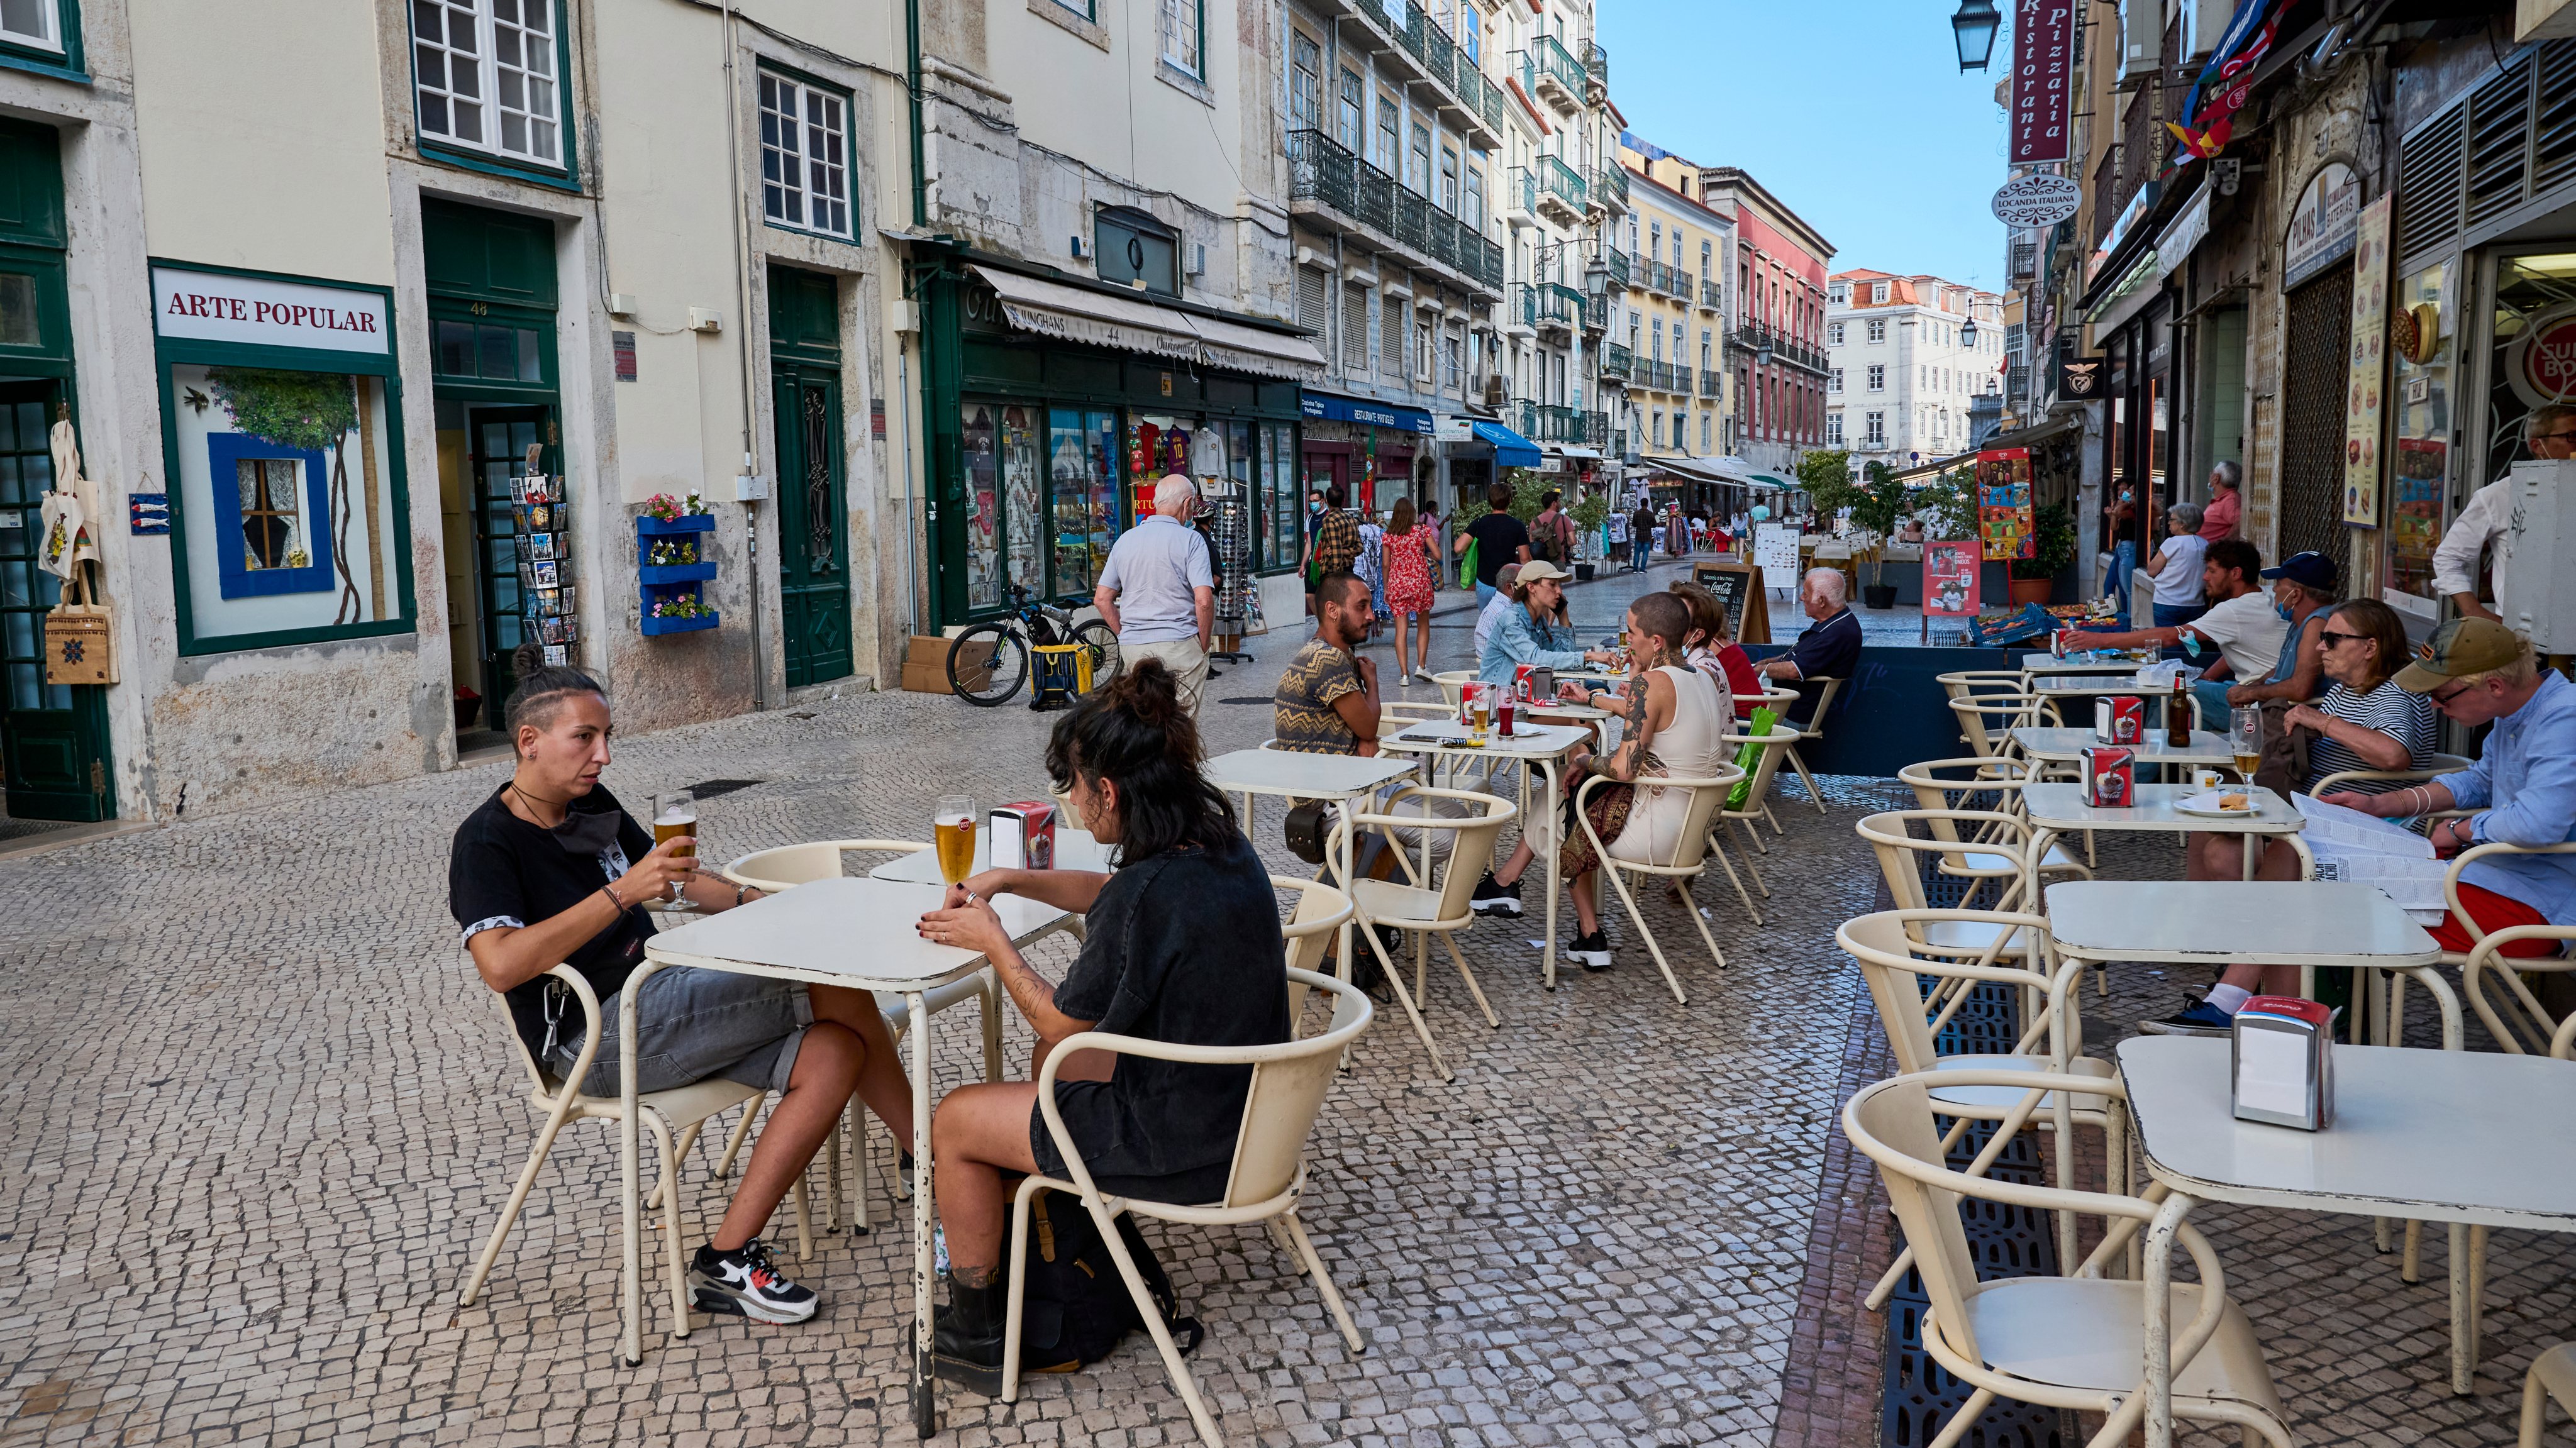 Lisbon Tourism Picks Up As COVID-19 Vaccination Continue